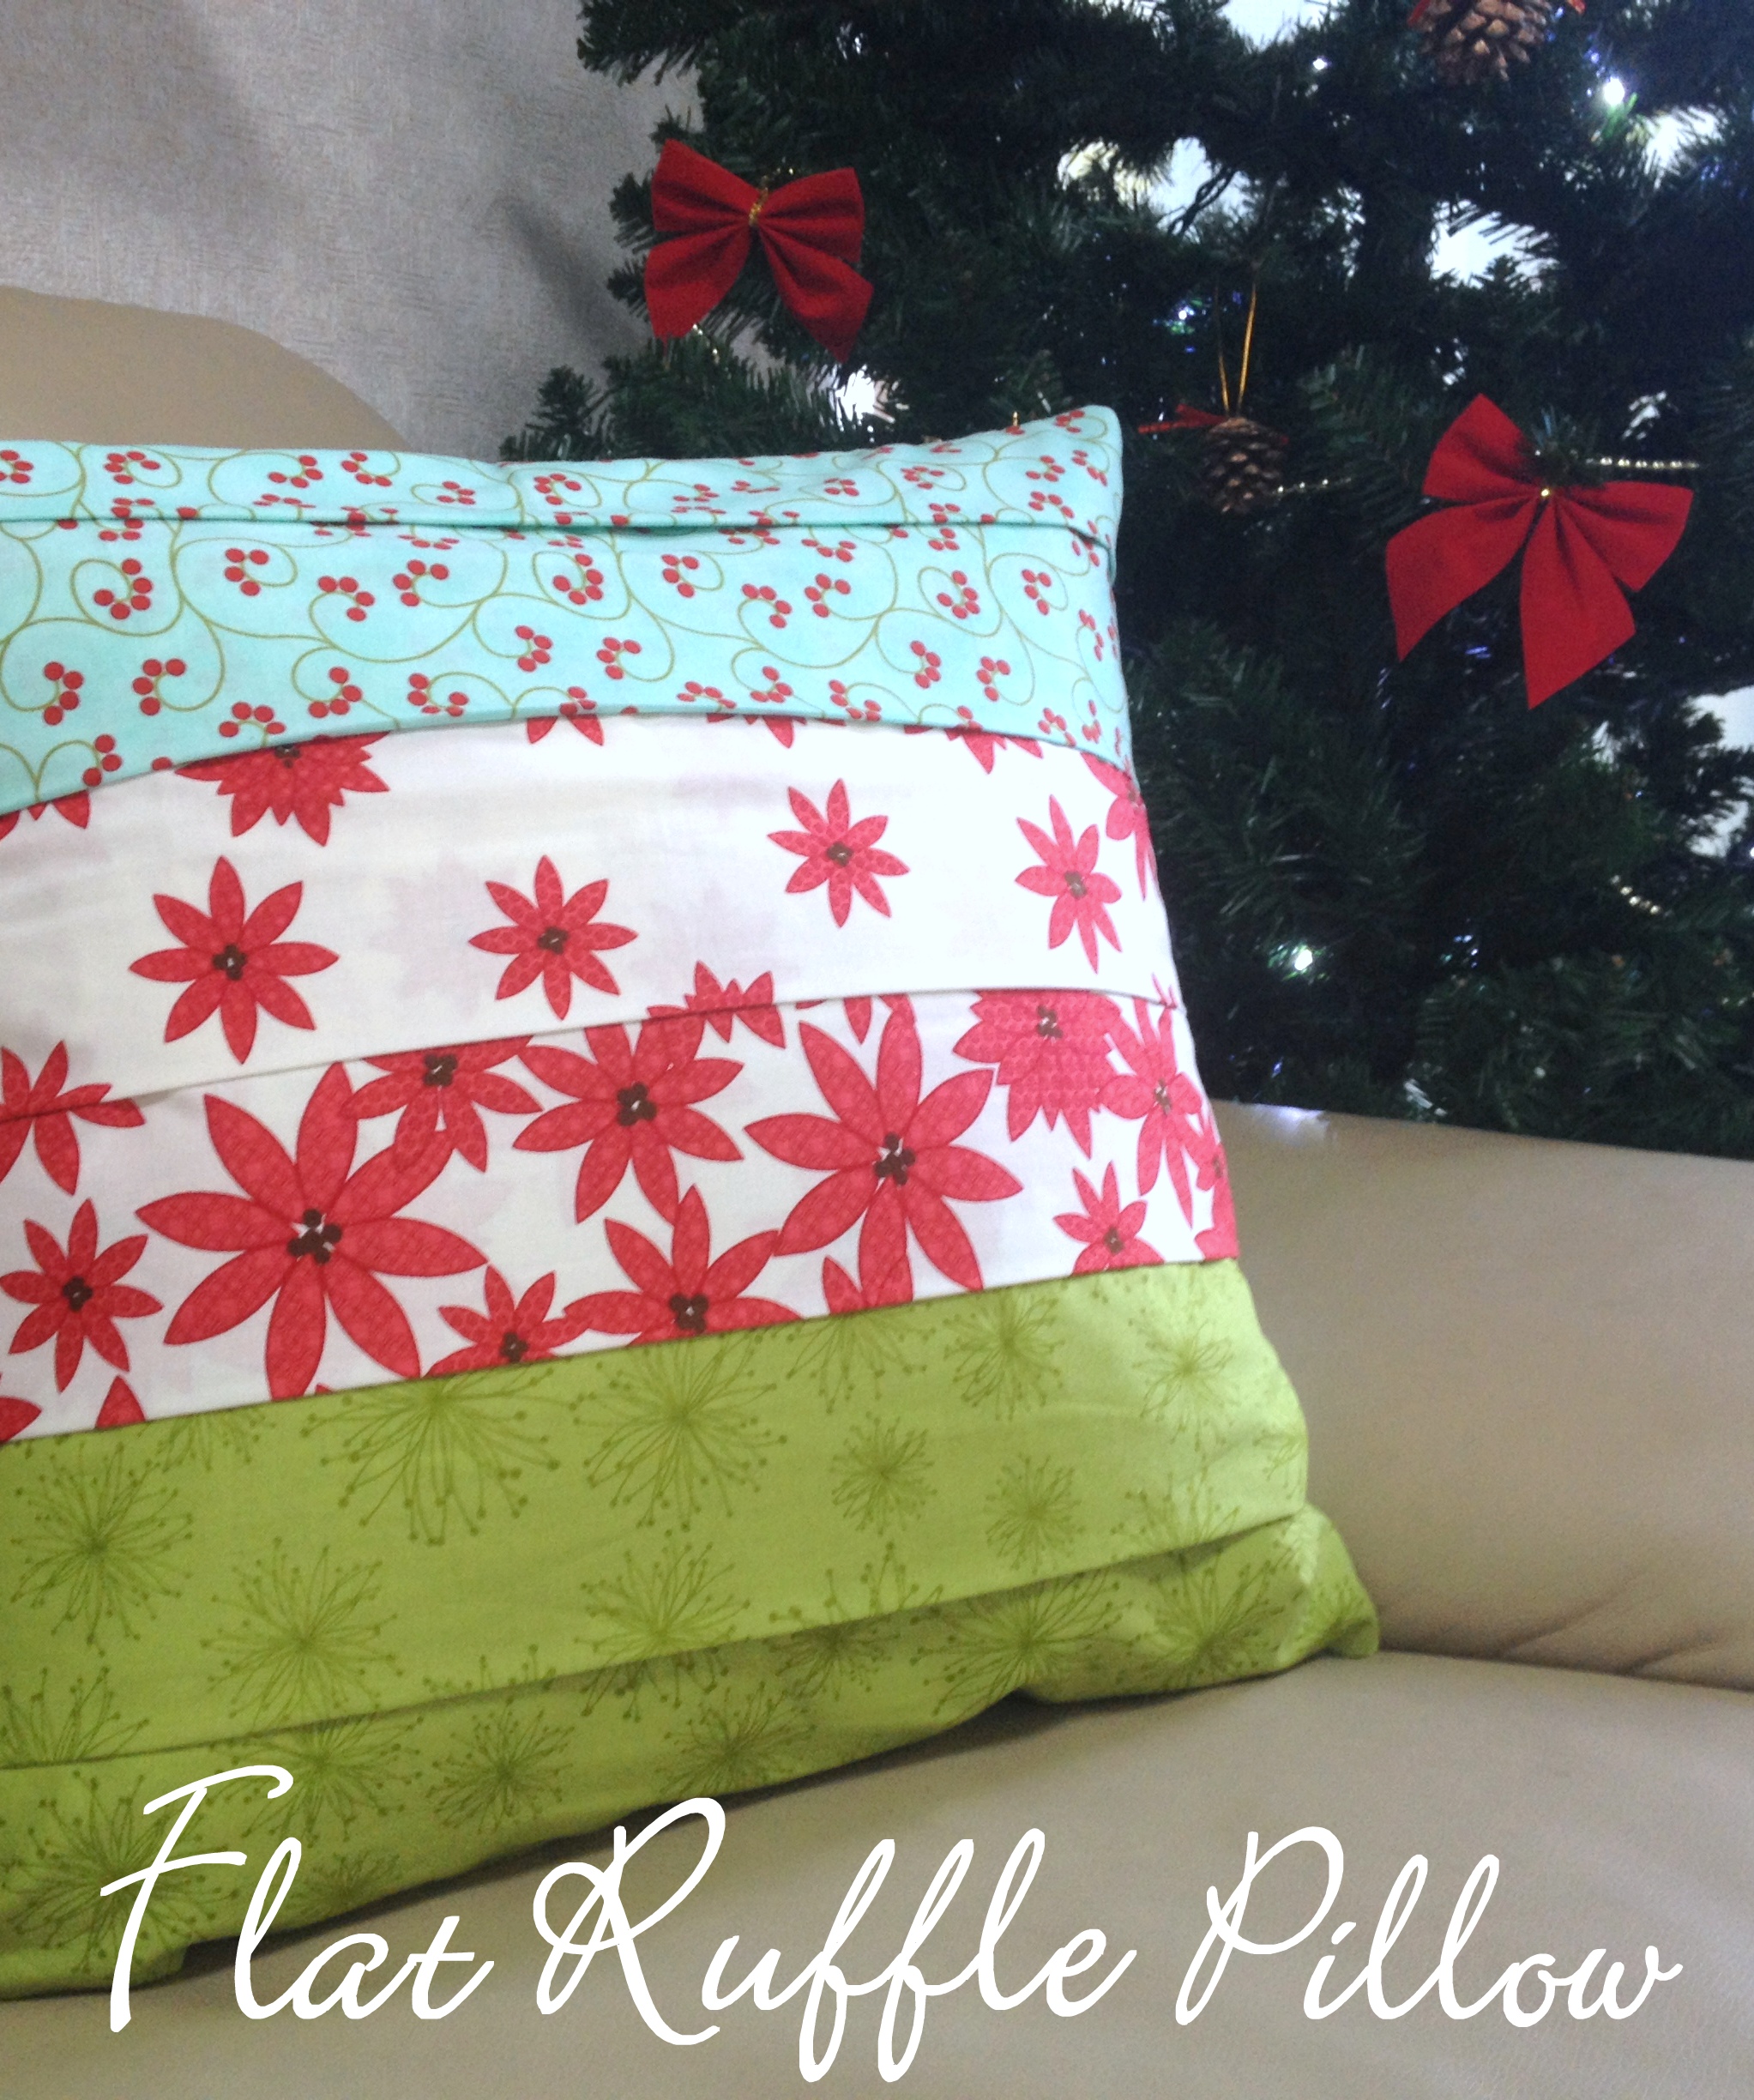 A Cushion For Christmas – A Flat Ruffle Pillow Tutorial